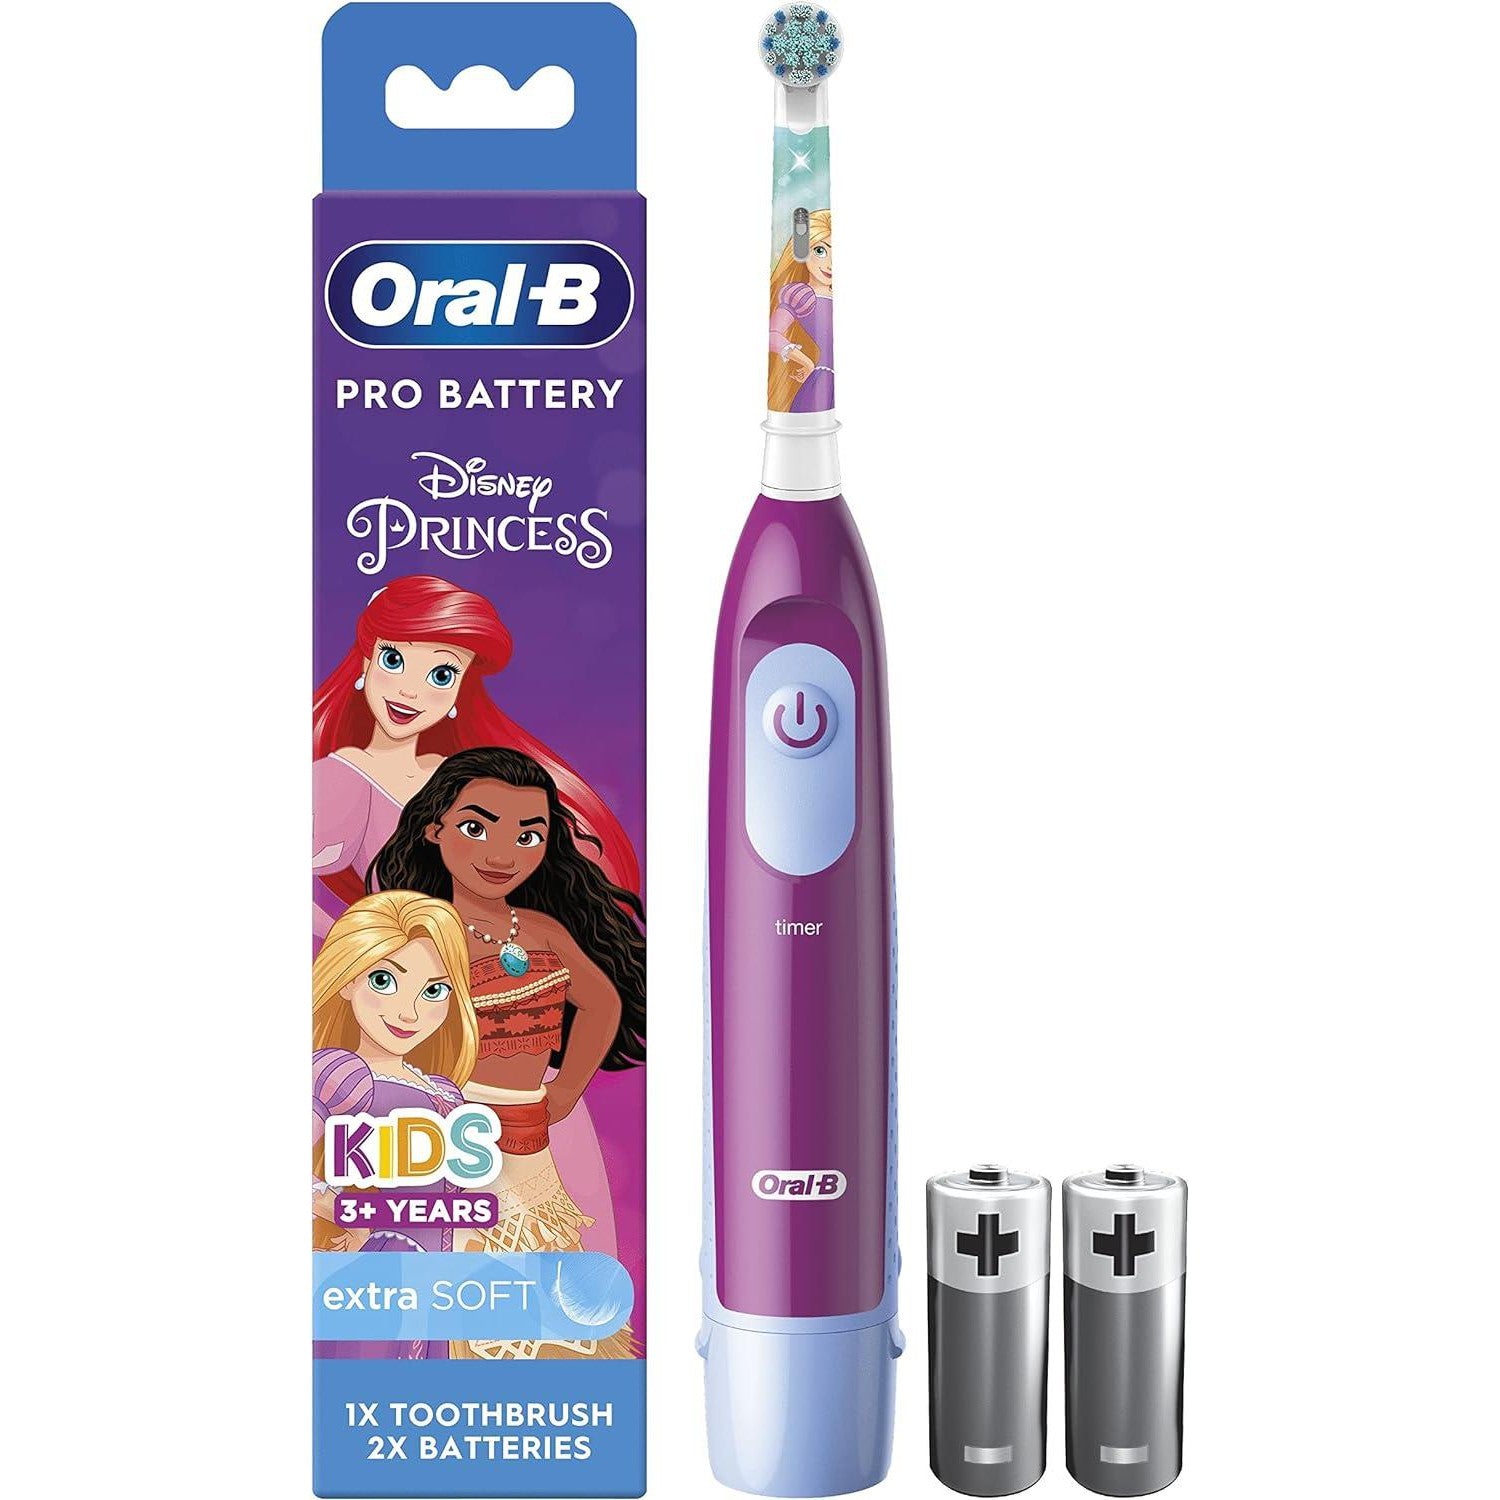 Oral-B Pro Battery Powered Kids Electric Toothbrush, 1 Toothbrush head Disney Princess